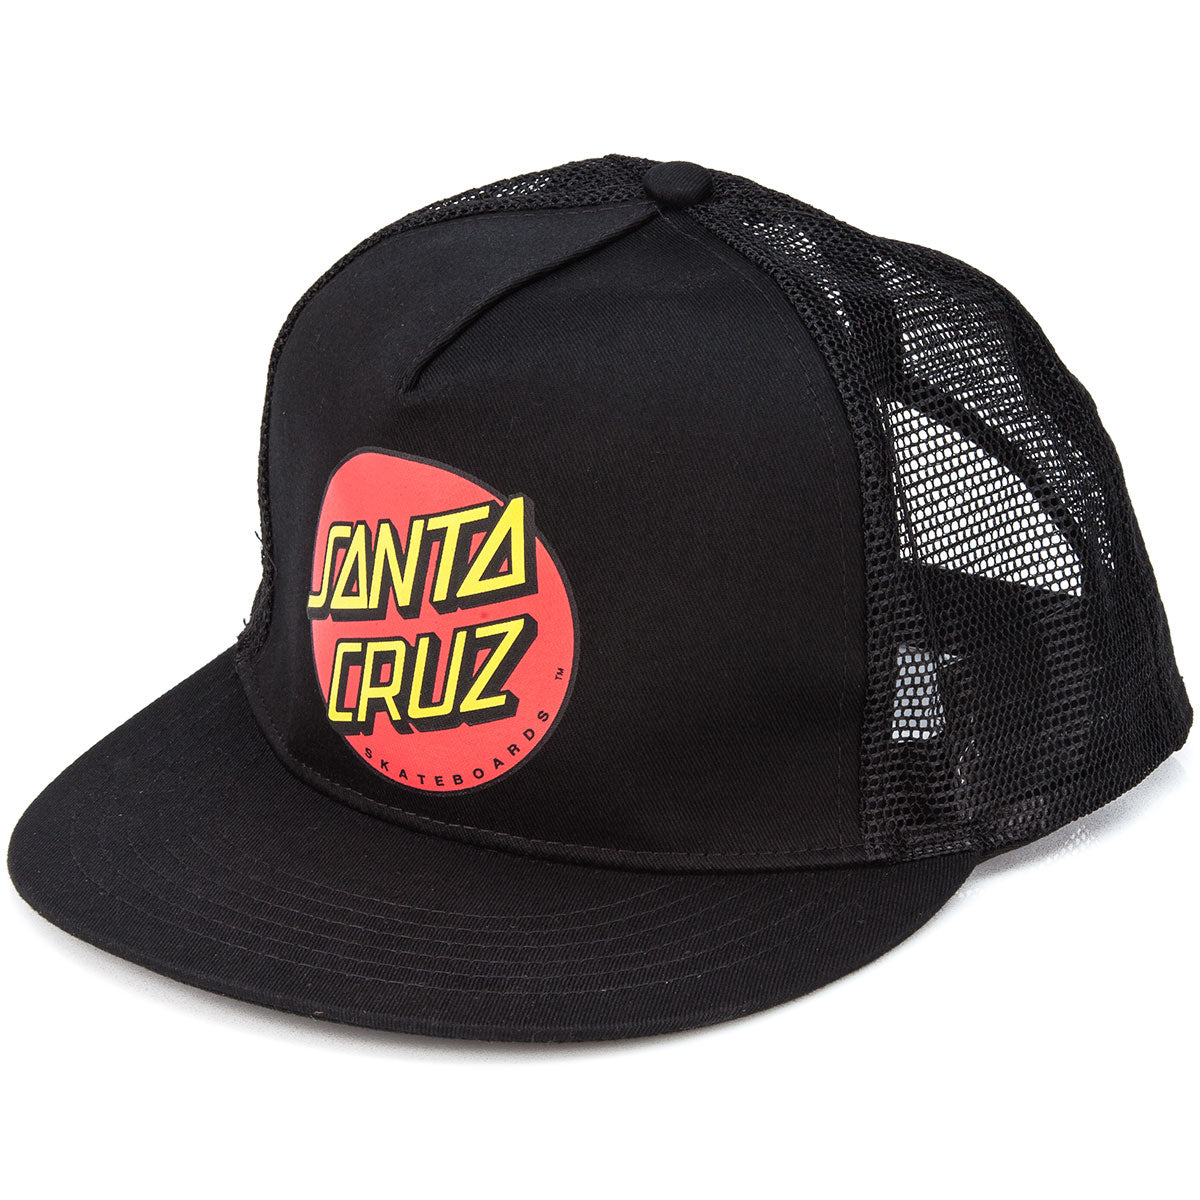 Santa Cruz Classic Dot Mesh Trucker Hat - Black image 1